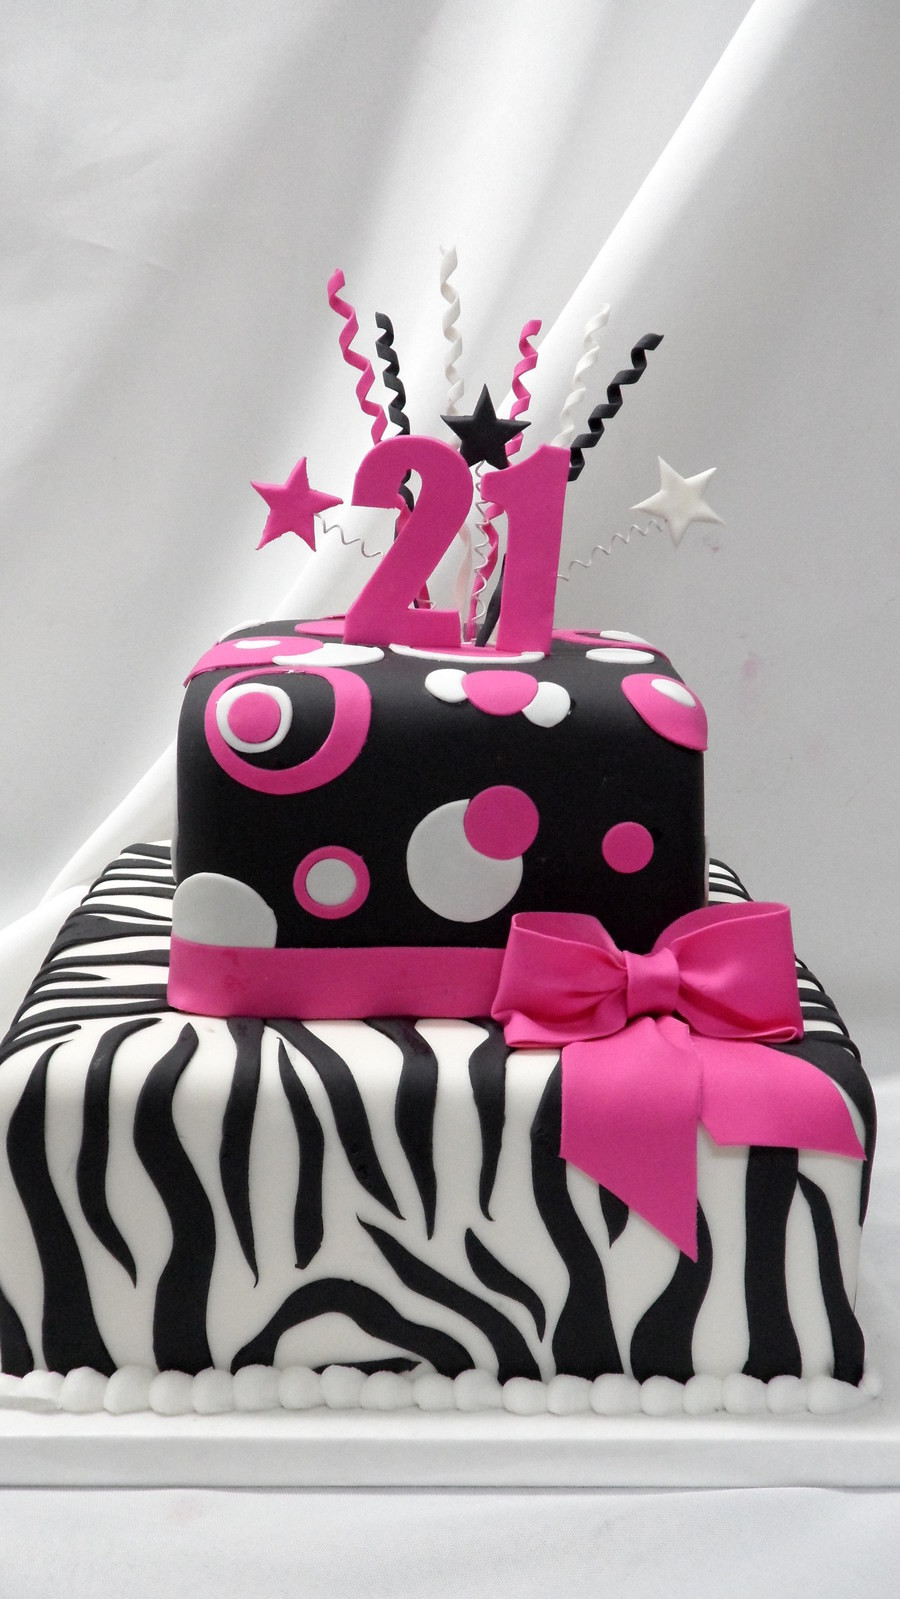 21st Birthday Cake
 10 Best 21st birthday cake designs CakenGifts